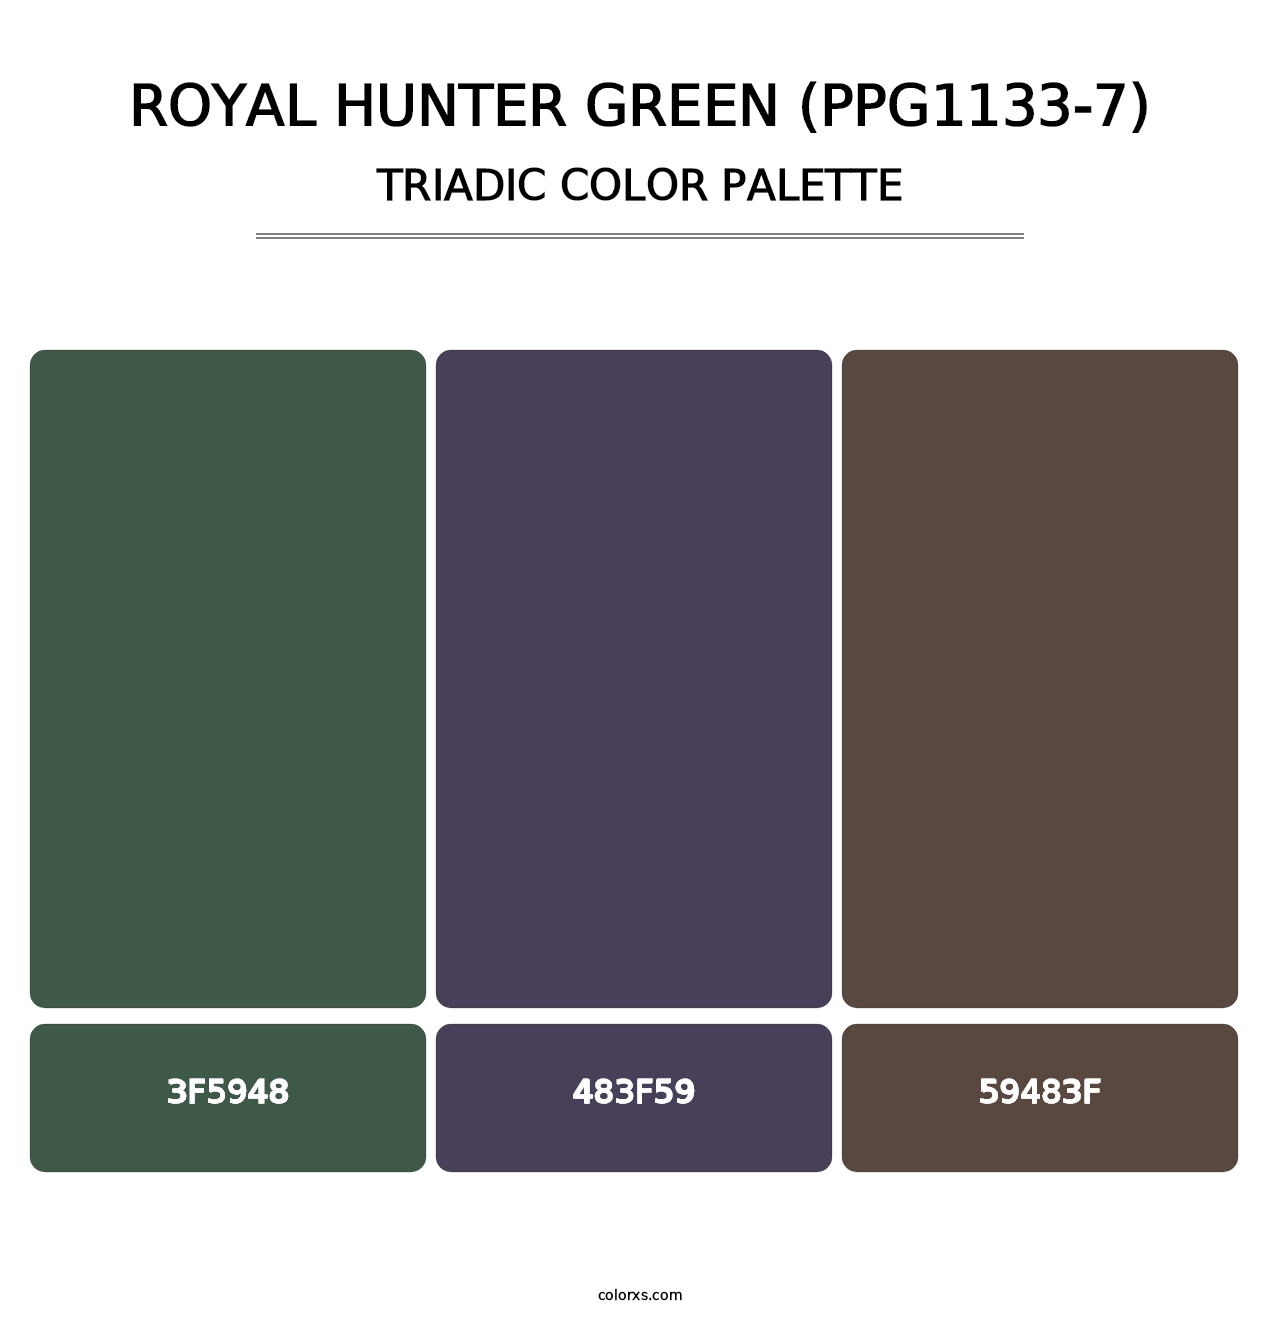 Royal Hunter Green (PPG1133-7) - Triadic Color Palette